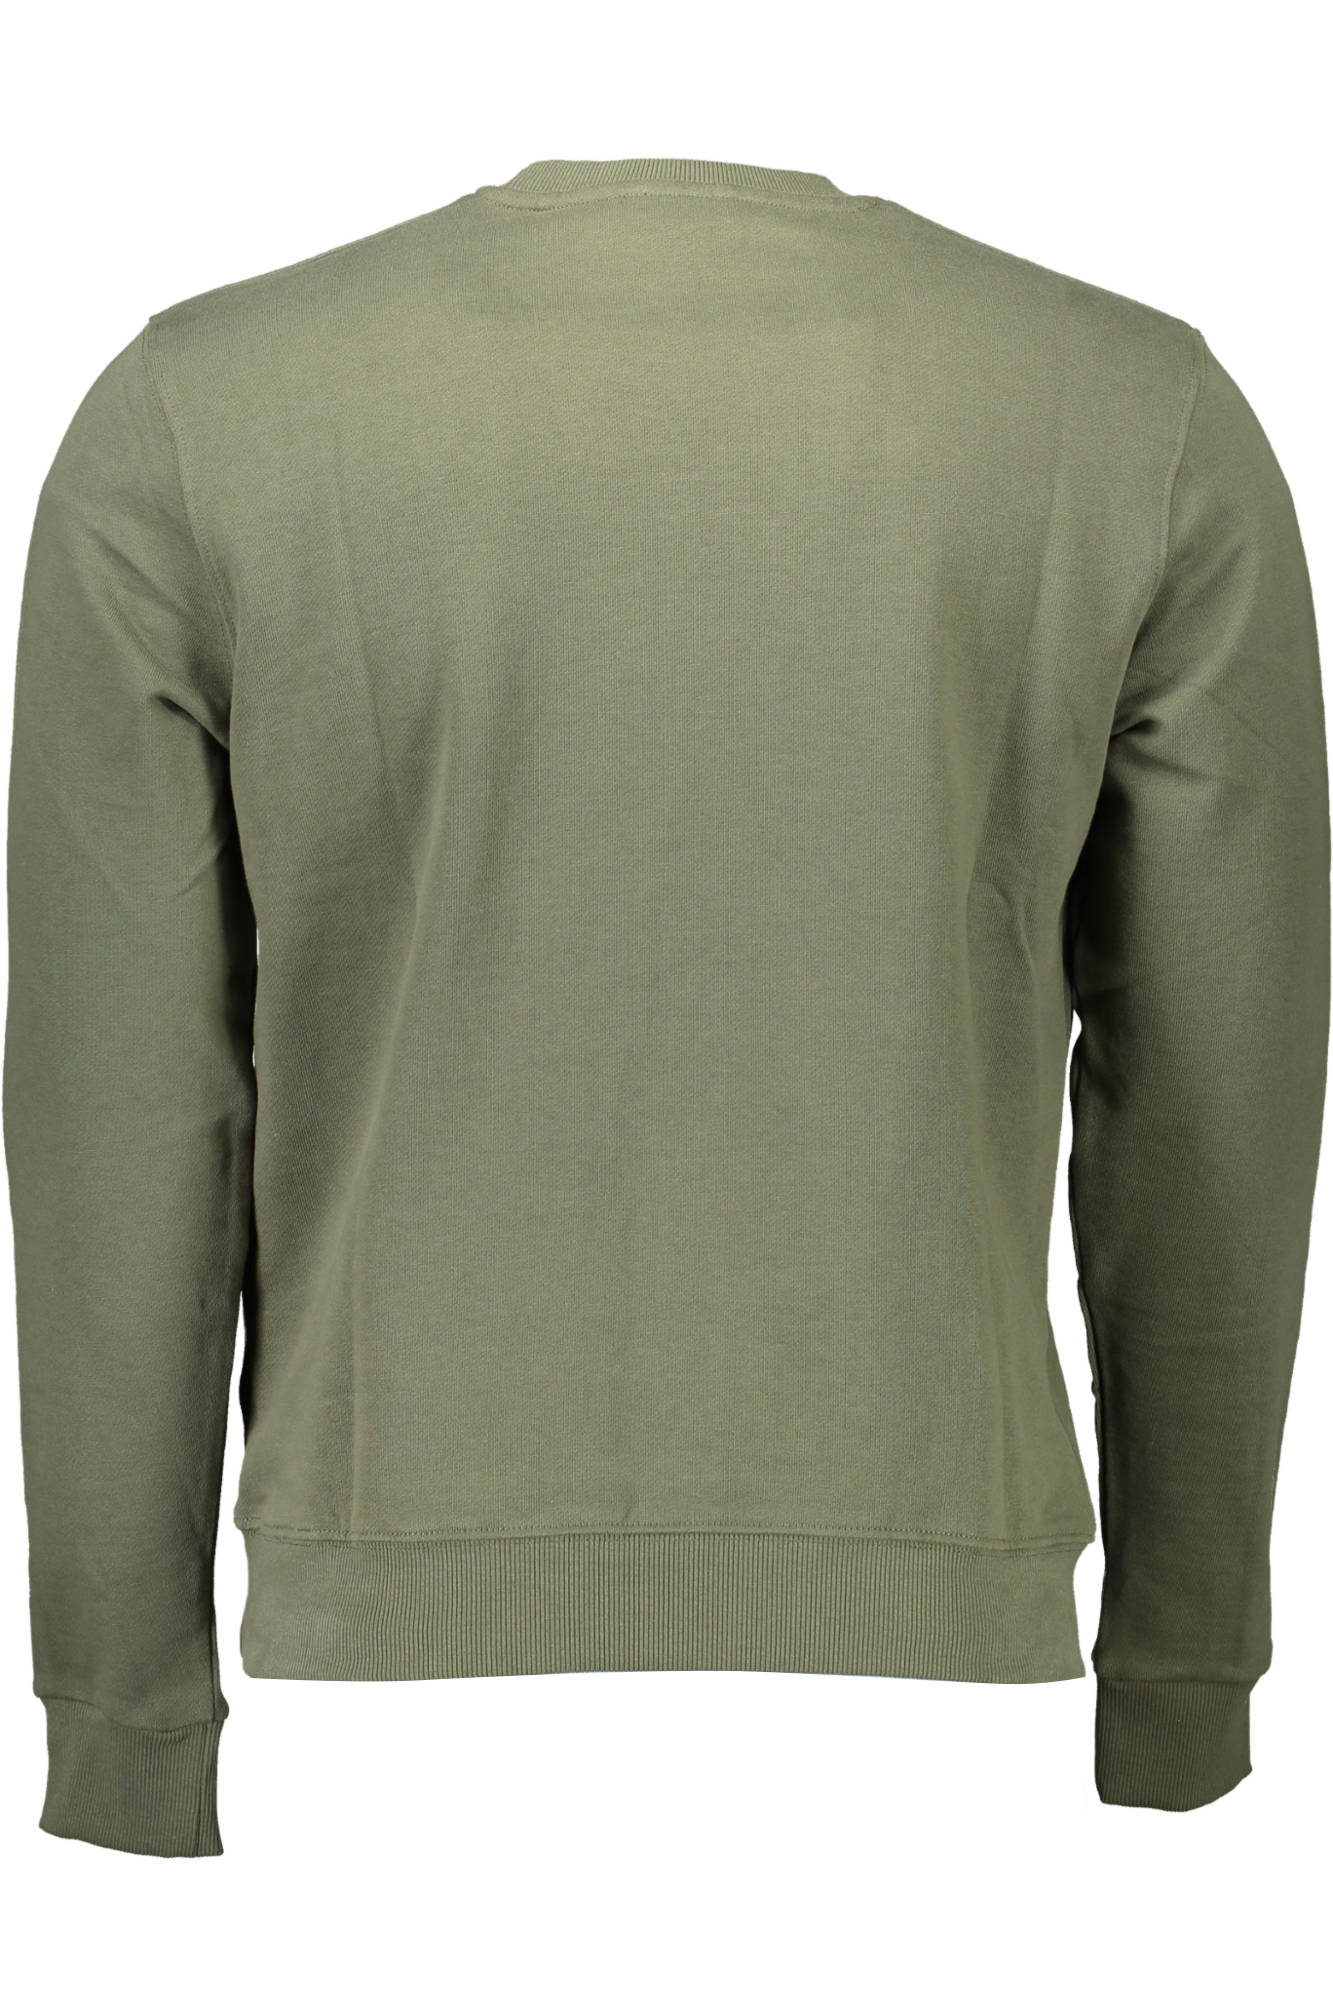 U.S. POLO ASSN. Green Sweater - Fizigo